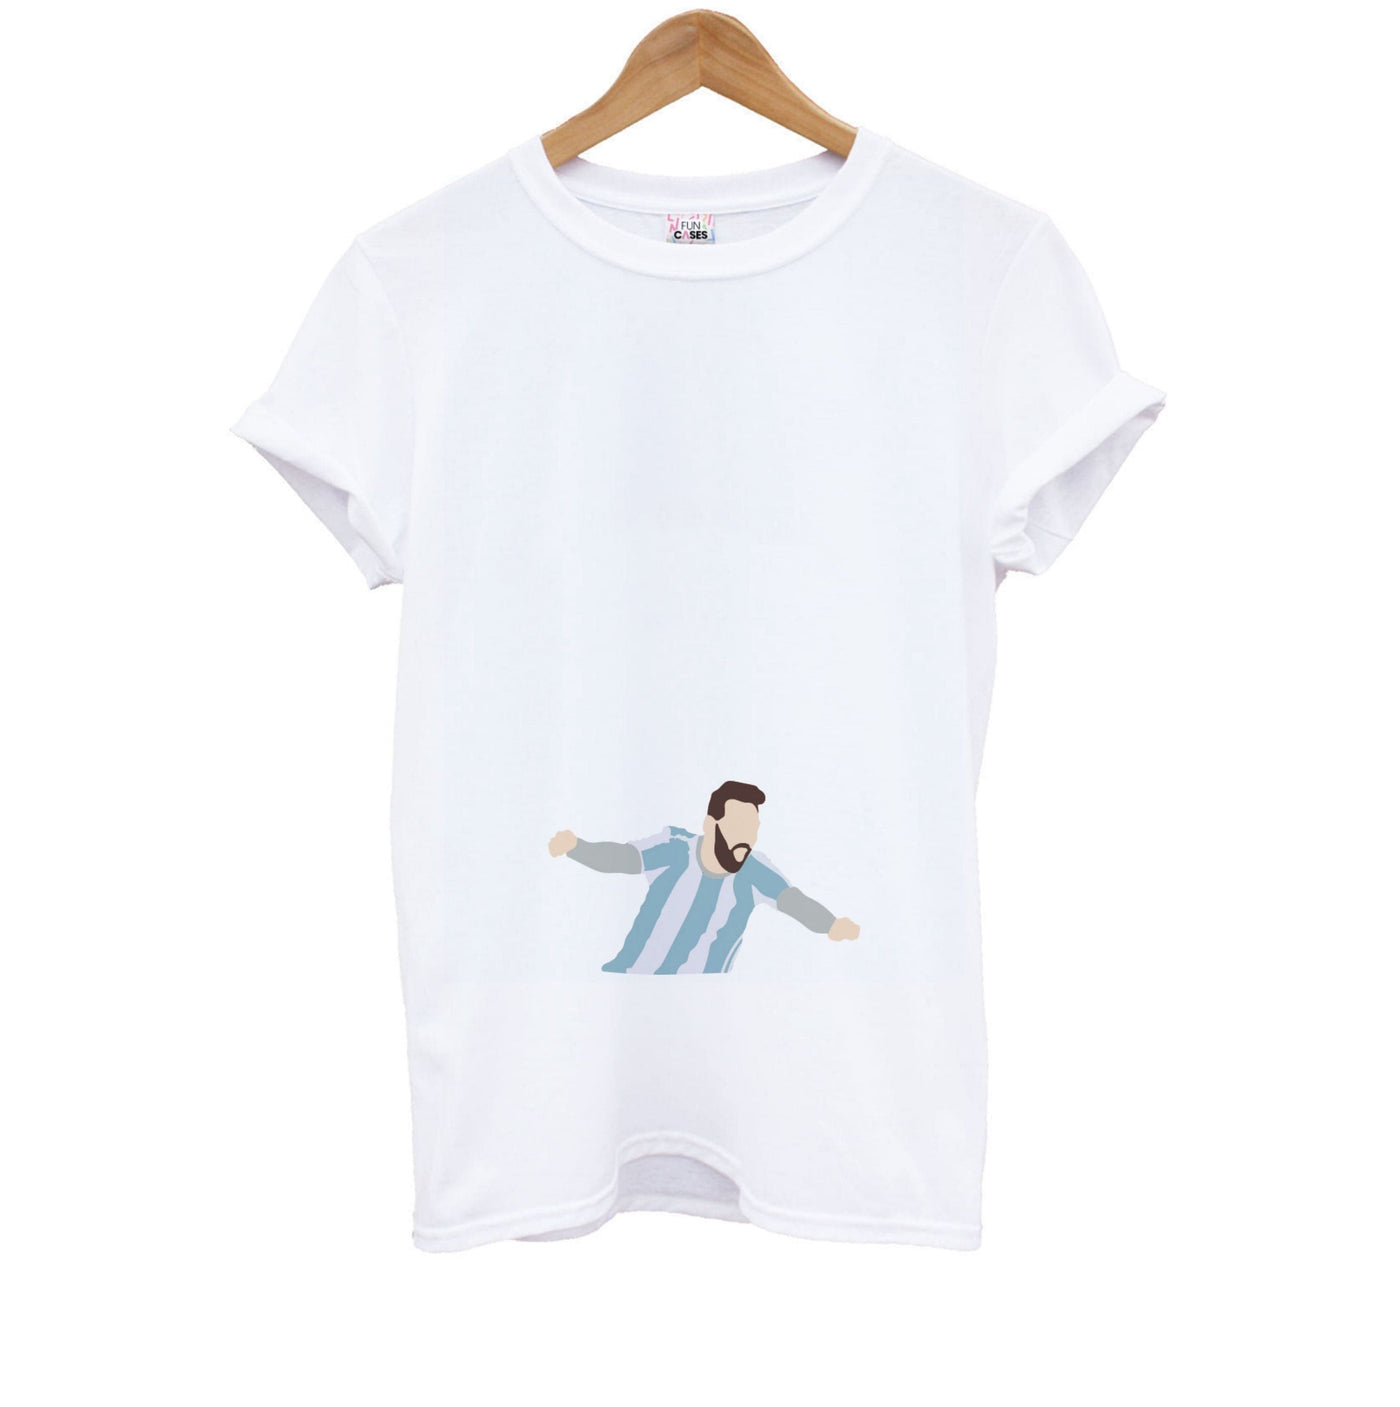 Goal - Messi Kids T-Shirt